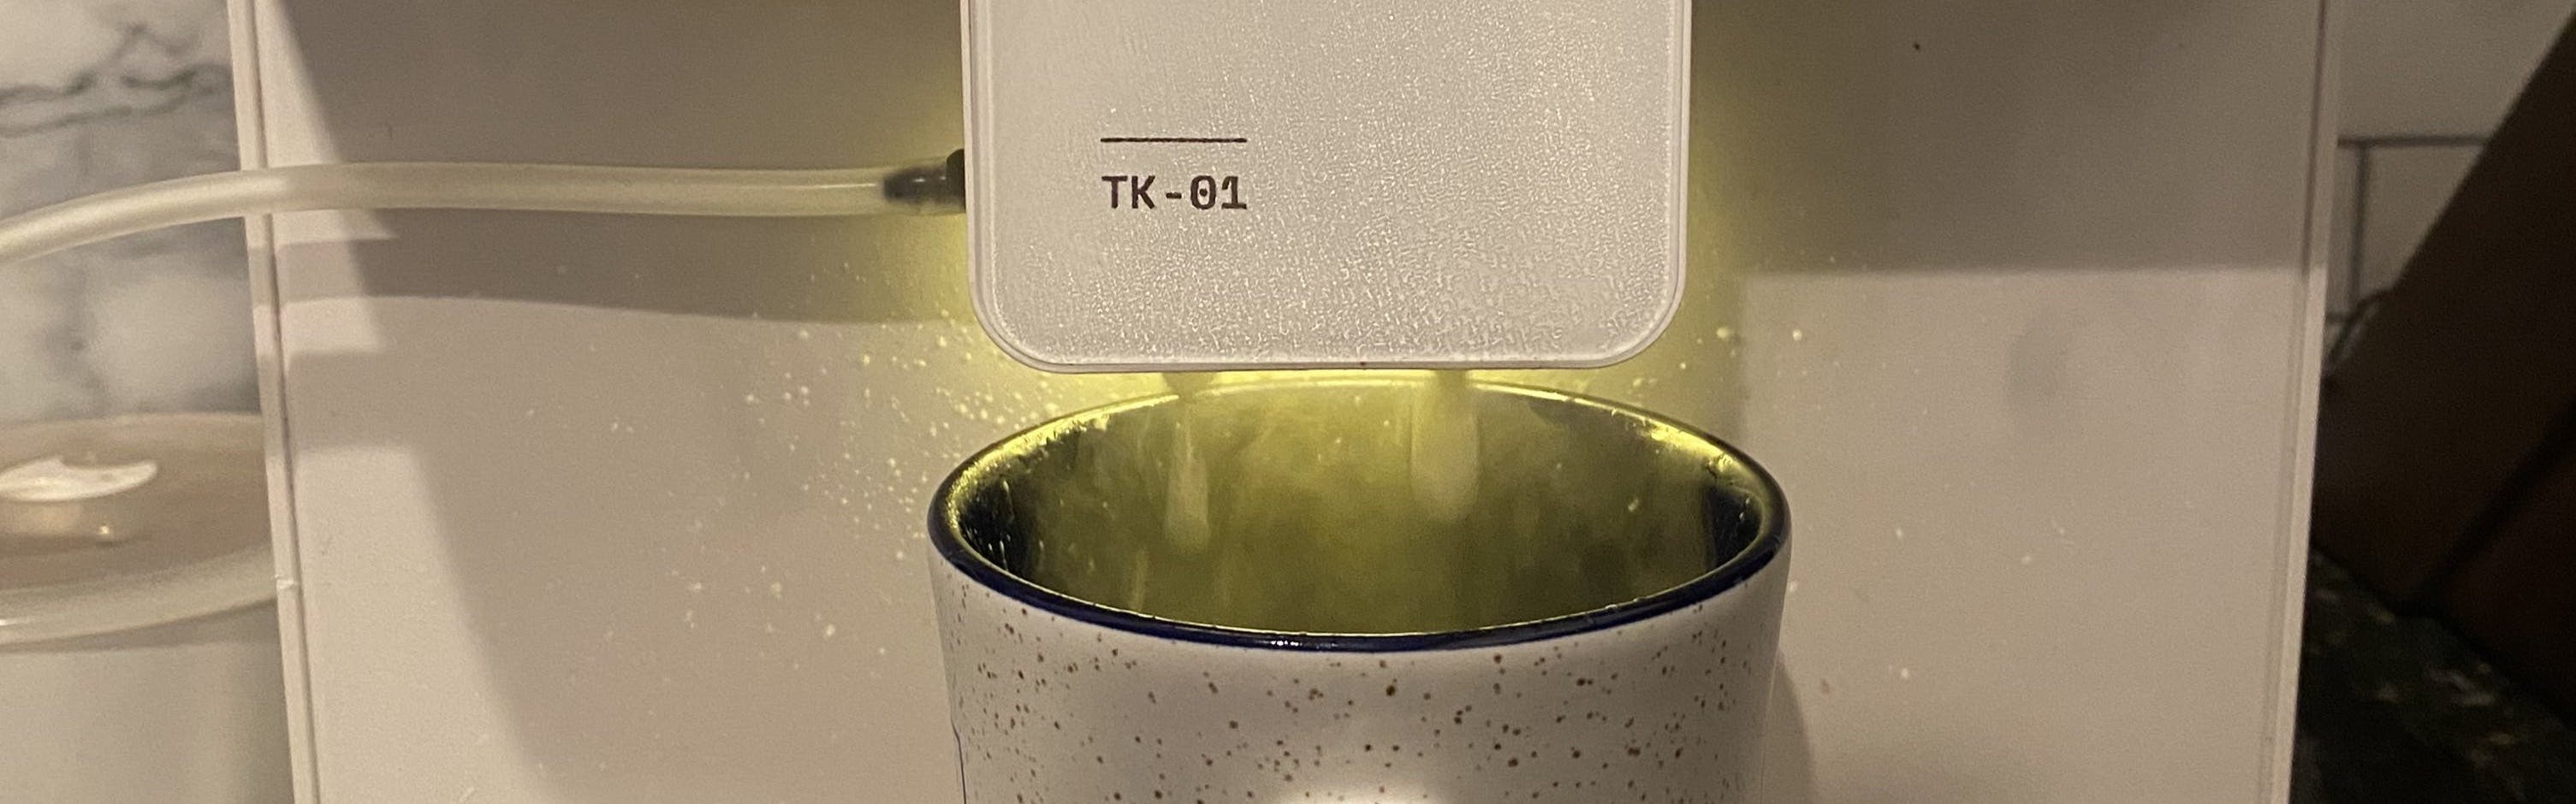 TK-01 Milk Carafe